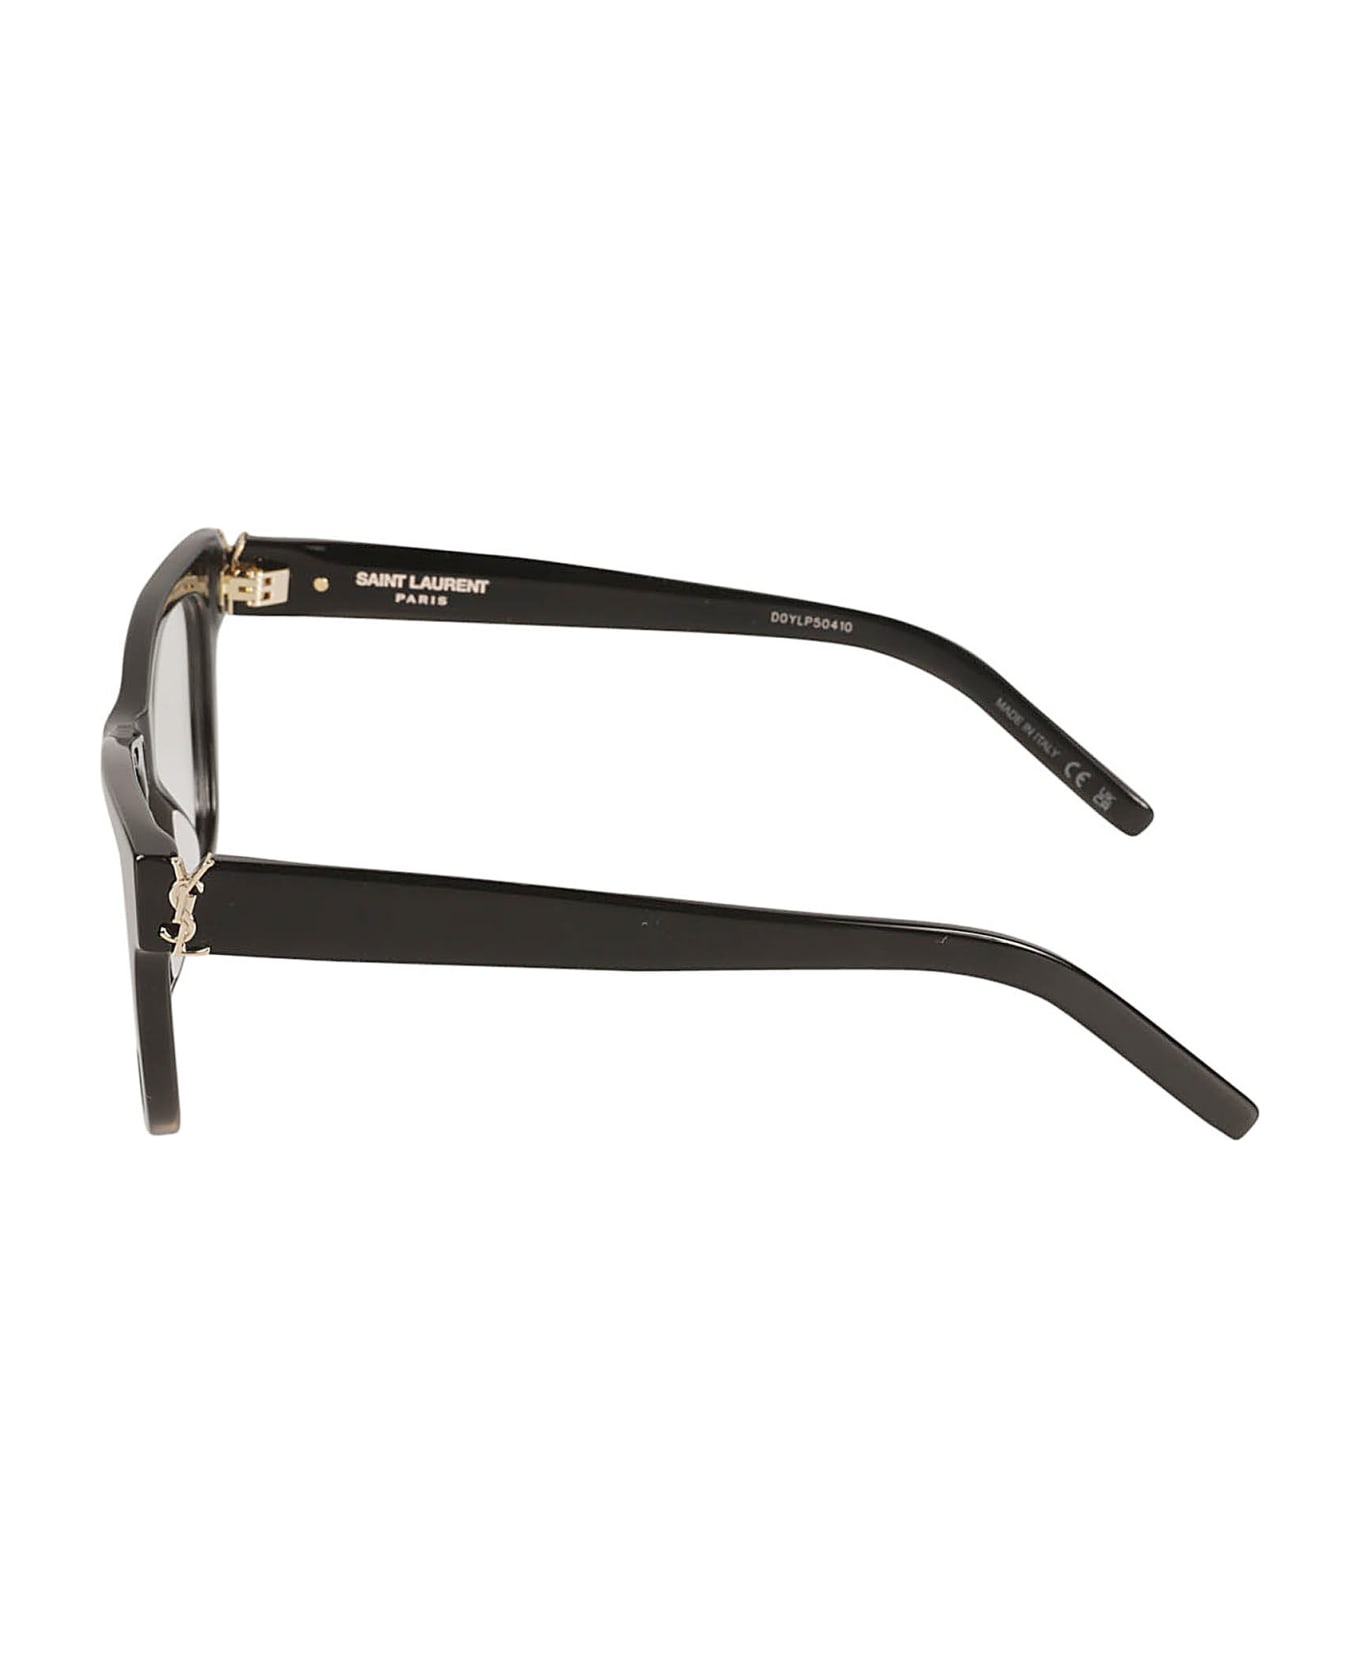 Saint Laurent Eyewear Ysl Hinge Square Frame Glasses - Black/Transparent